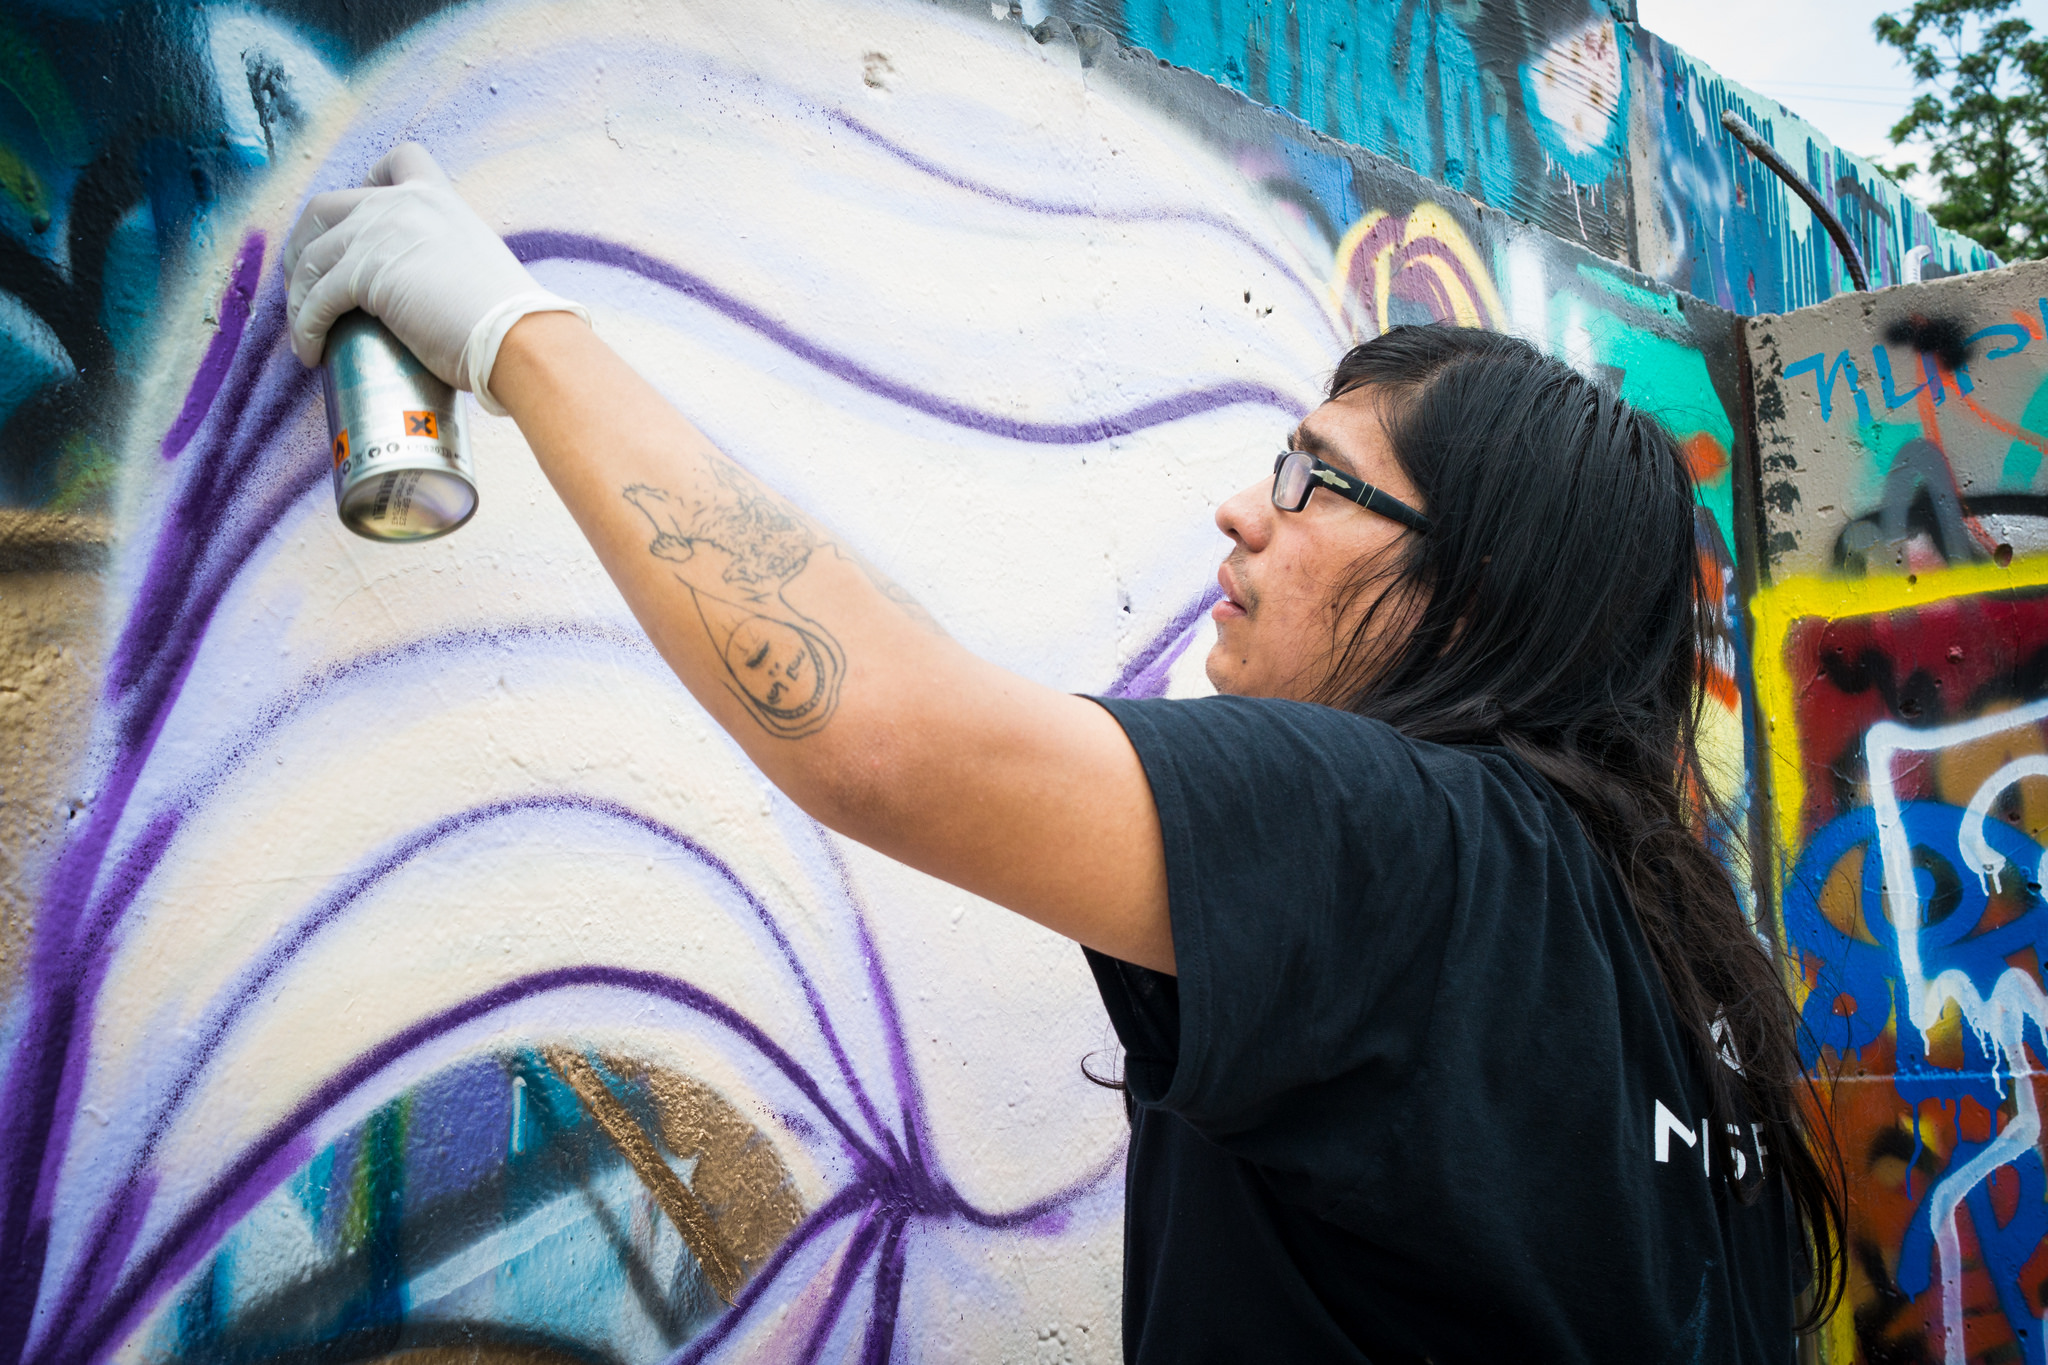 street art artist hope outdoor gallery graffiti spray paint mural wall painting